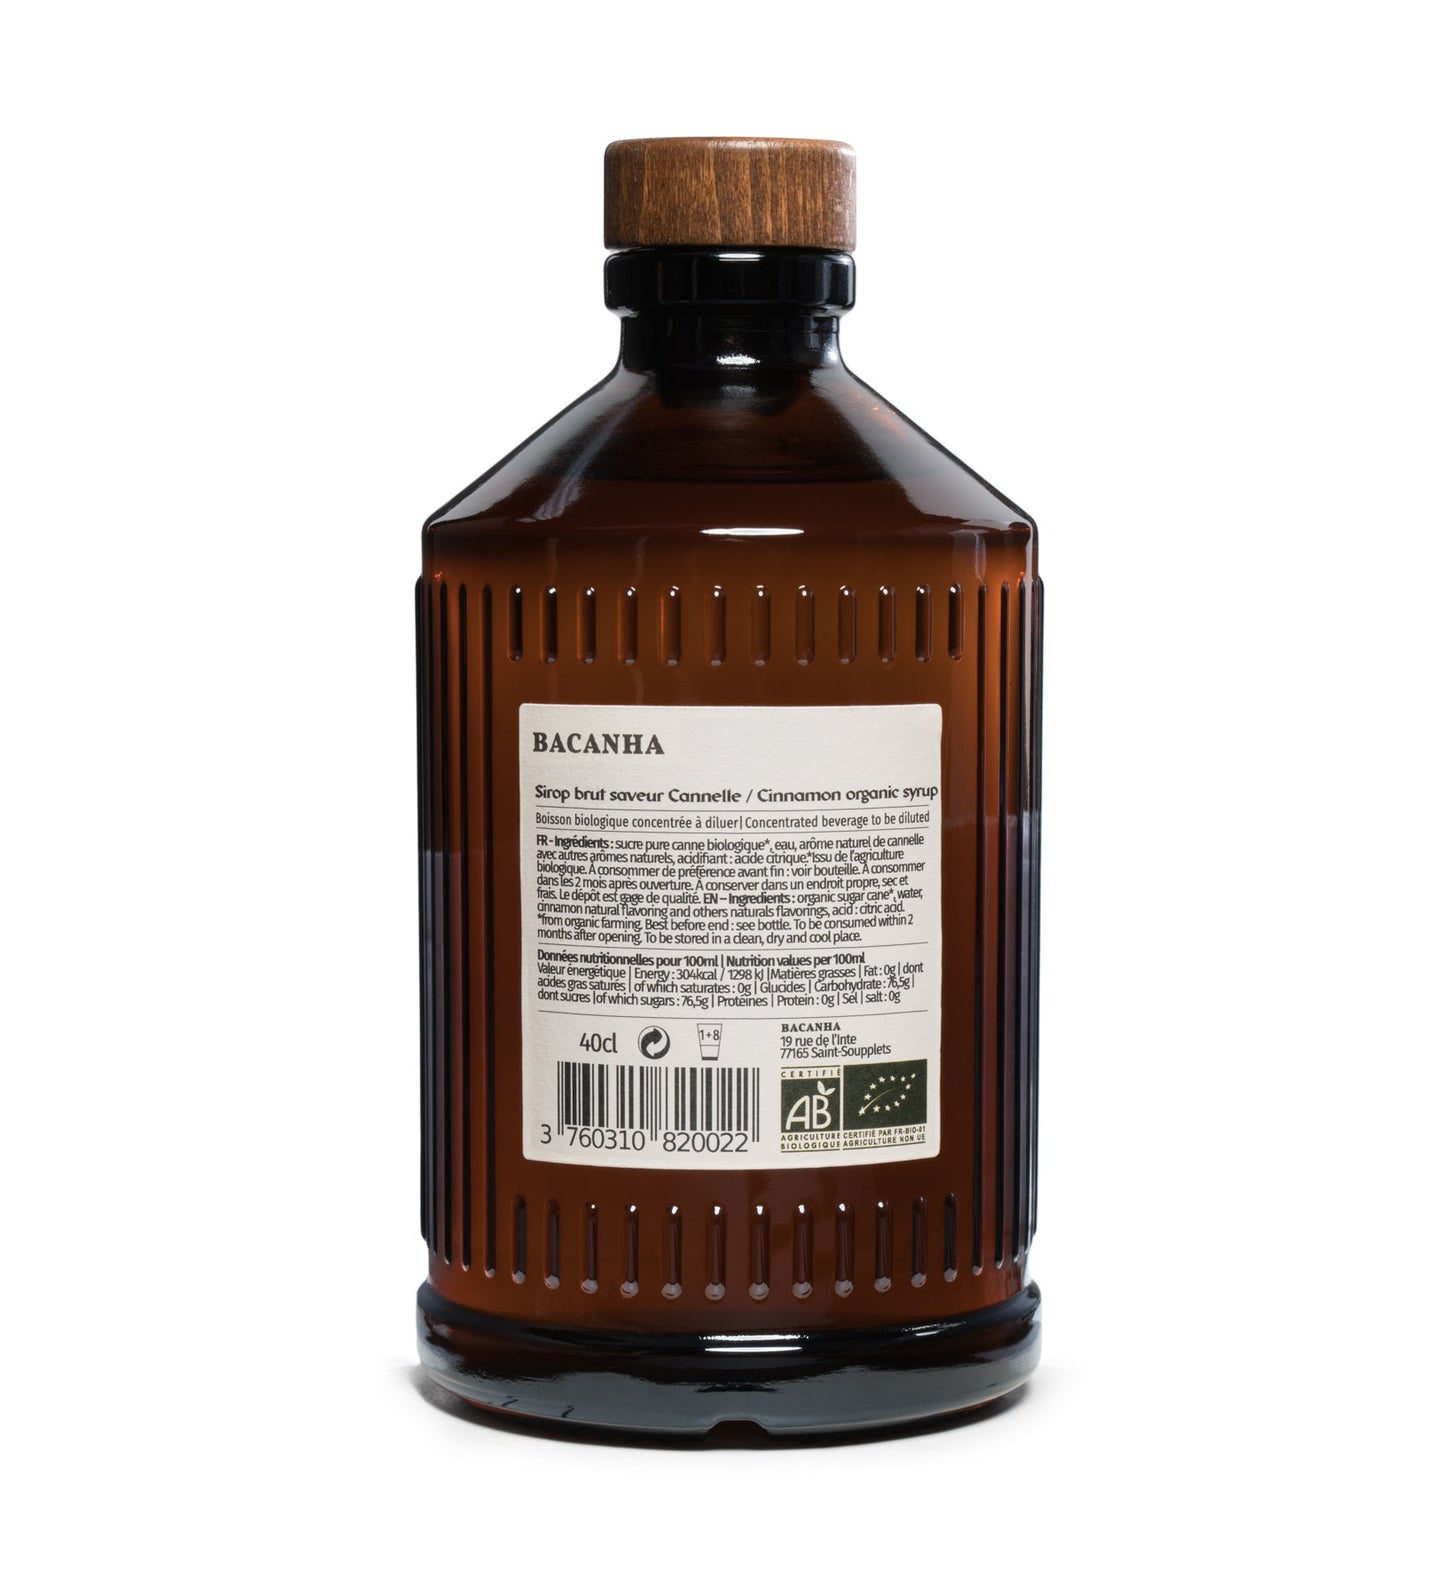 Bacanha Cinnamon flavored syrup [ORGANIC]